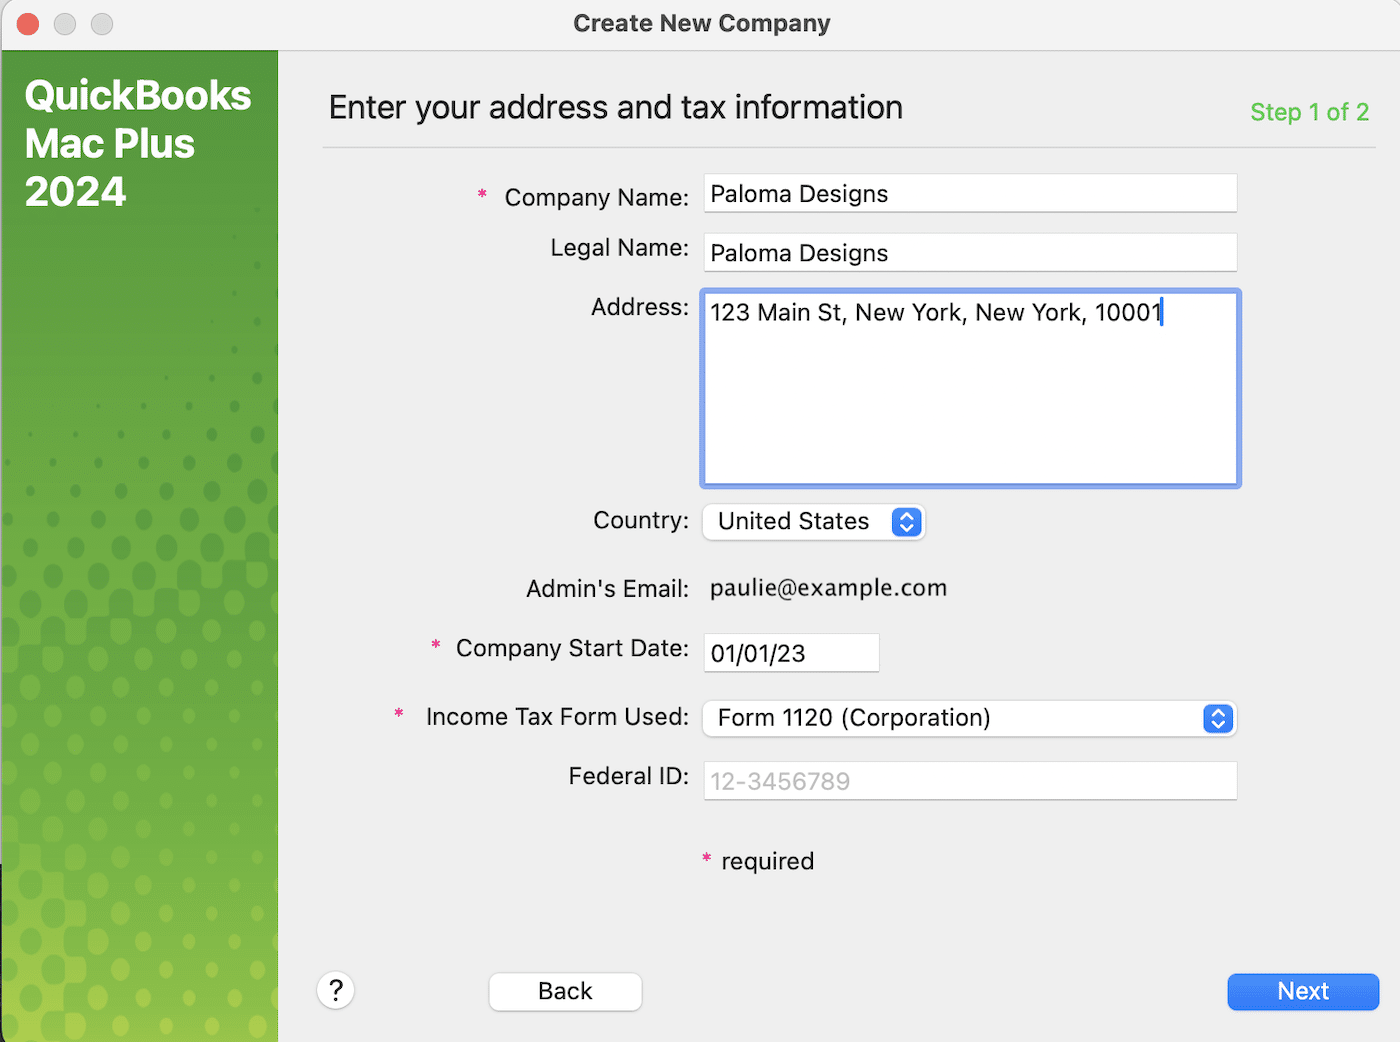 Add company information to QuickBooks